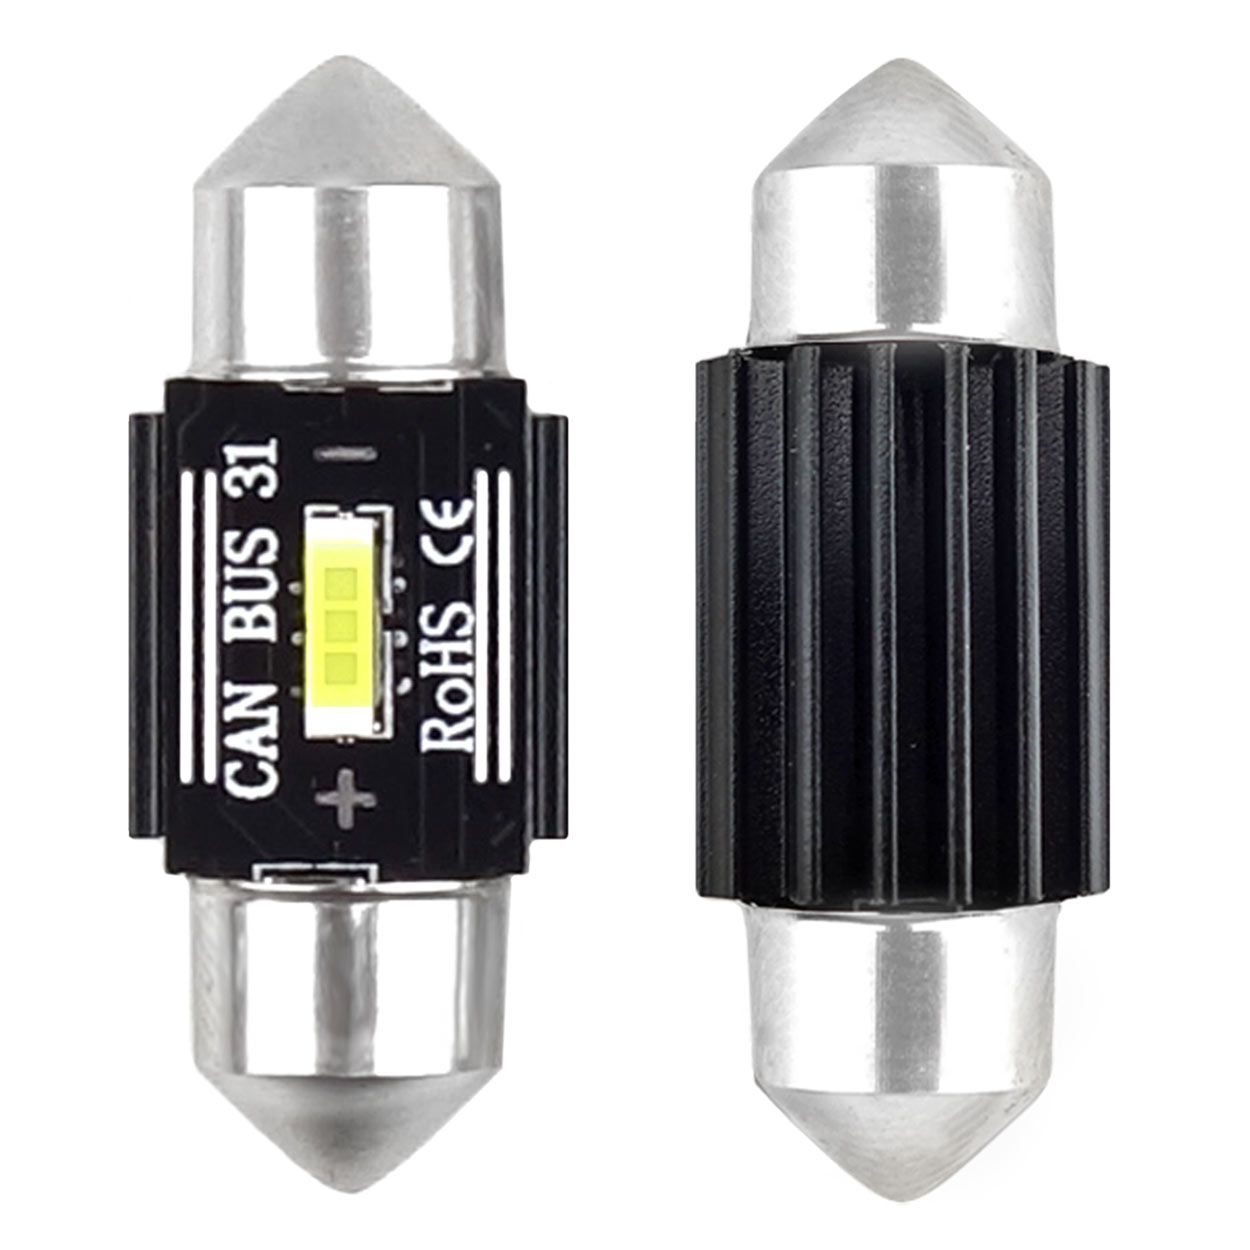 CANBUS LED žárovky 1 x SMD, UltraBright 1860, Festoon 31 mm Bílá, 12 V / 24 V.